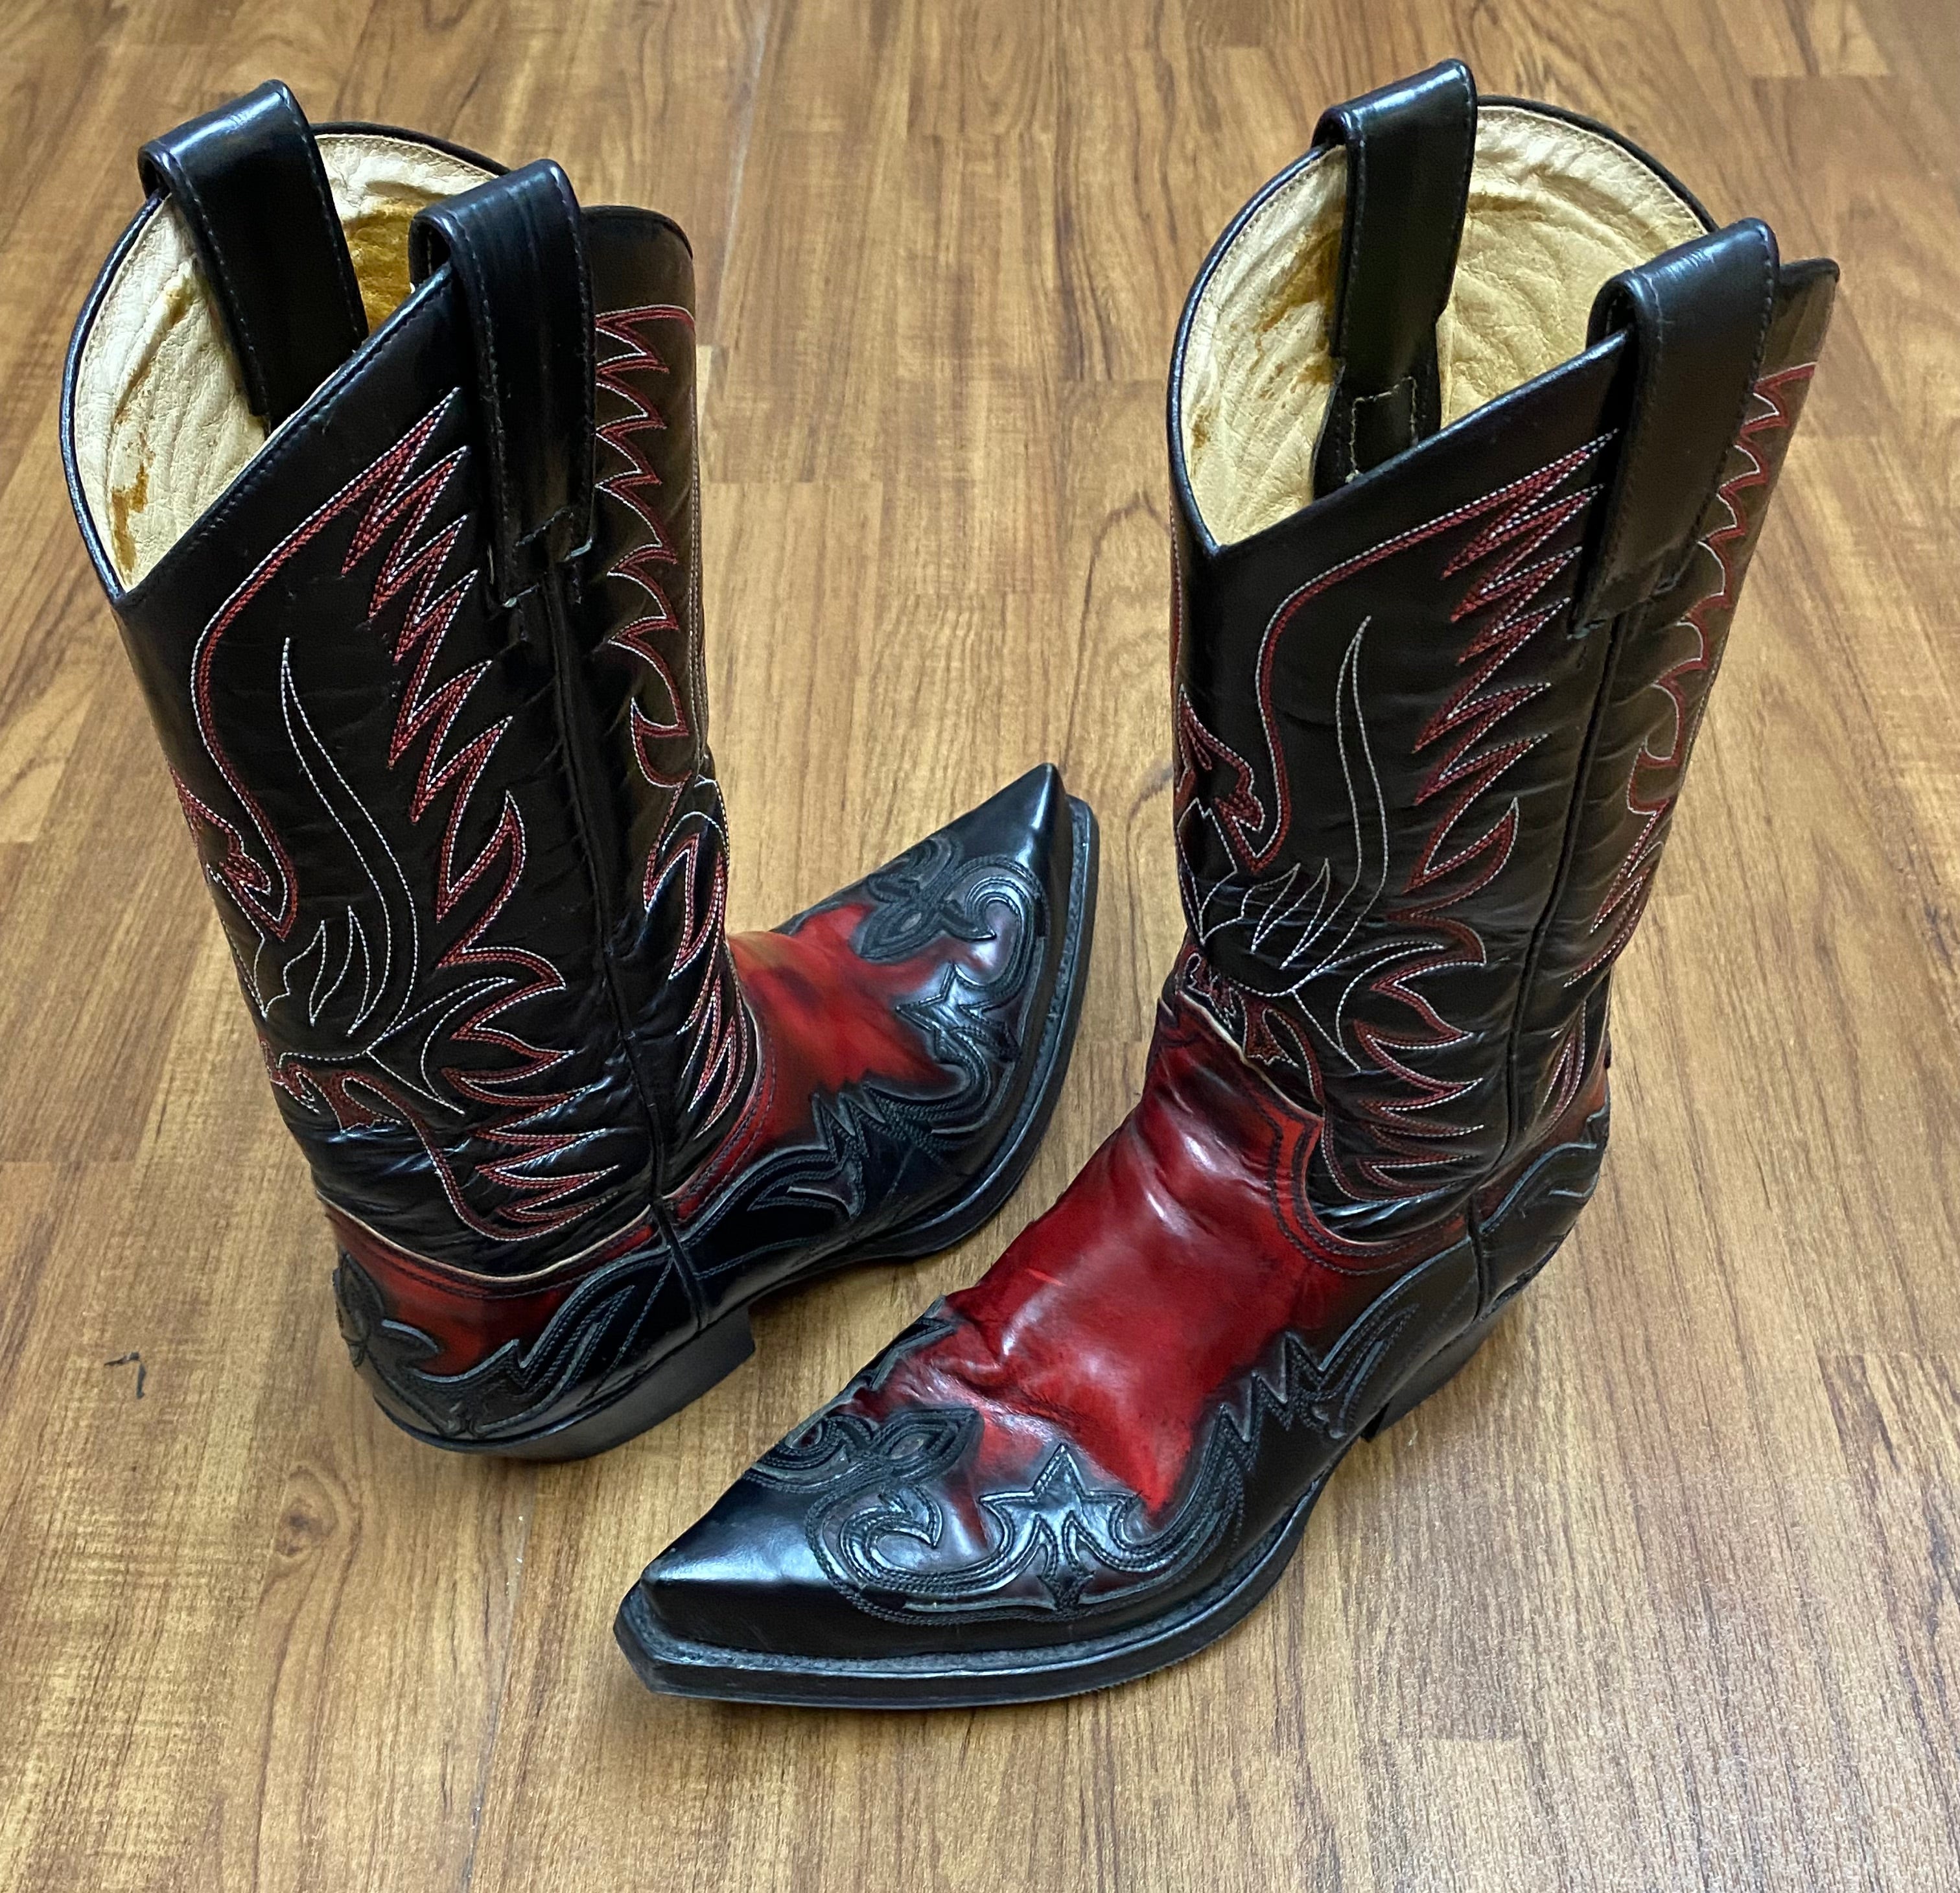 Cowboyboots, Stiefel in schwarz/rot, Marke Sendra